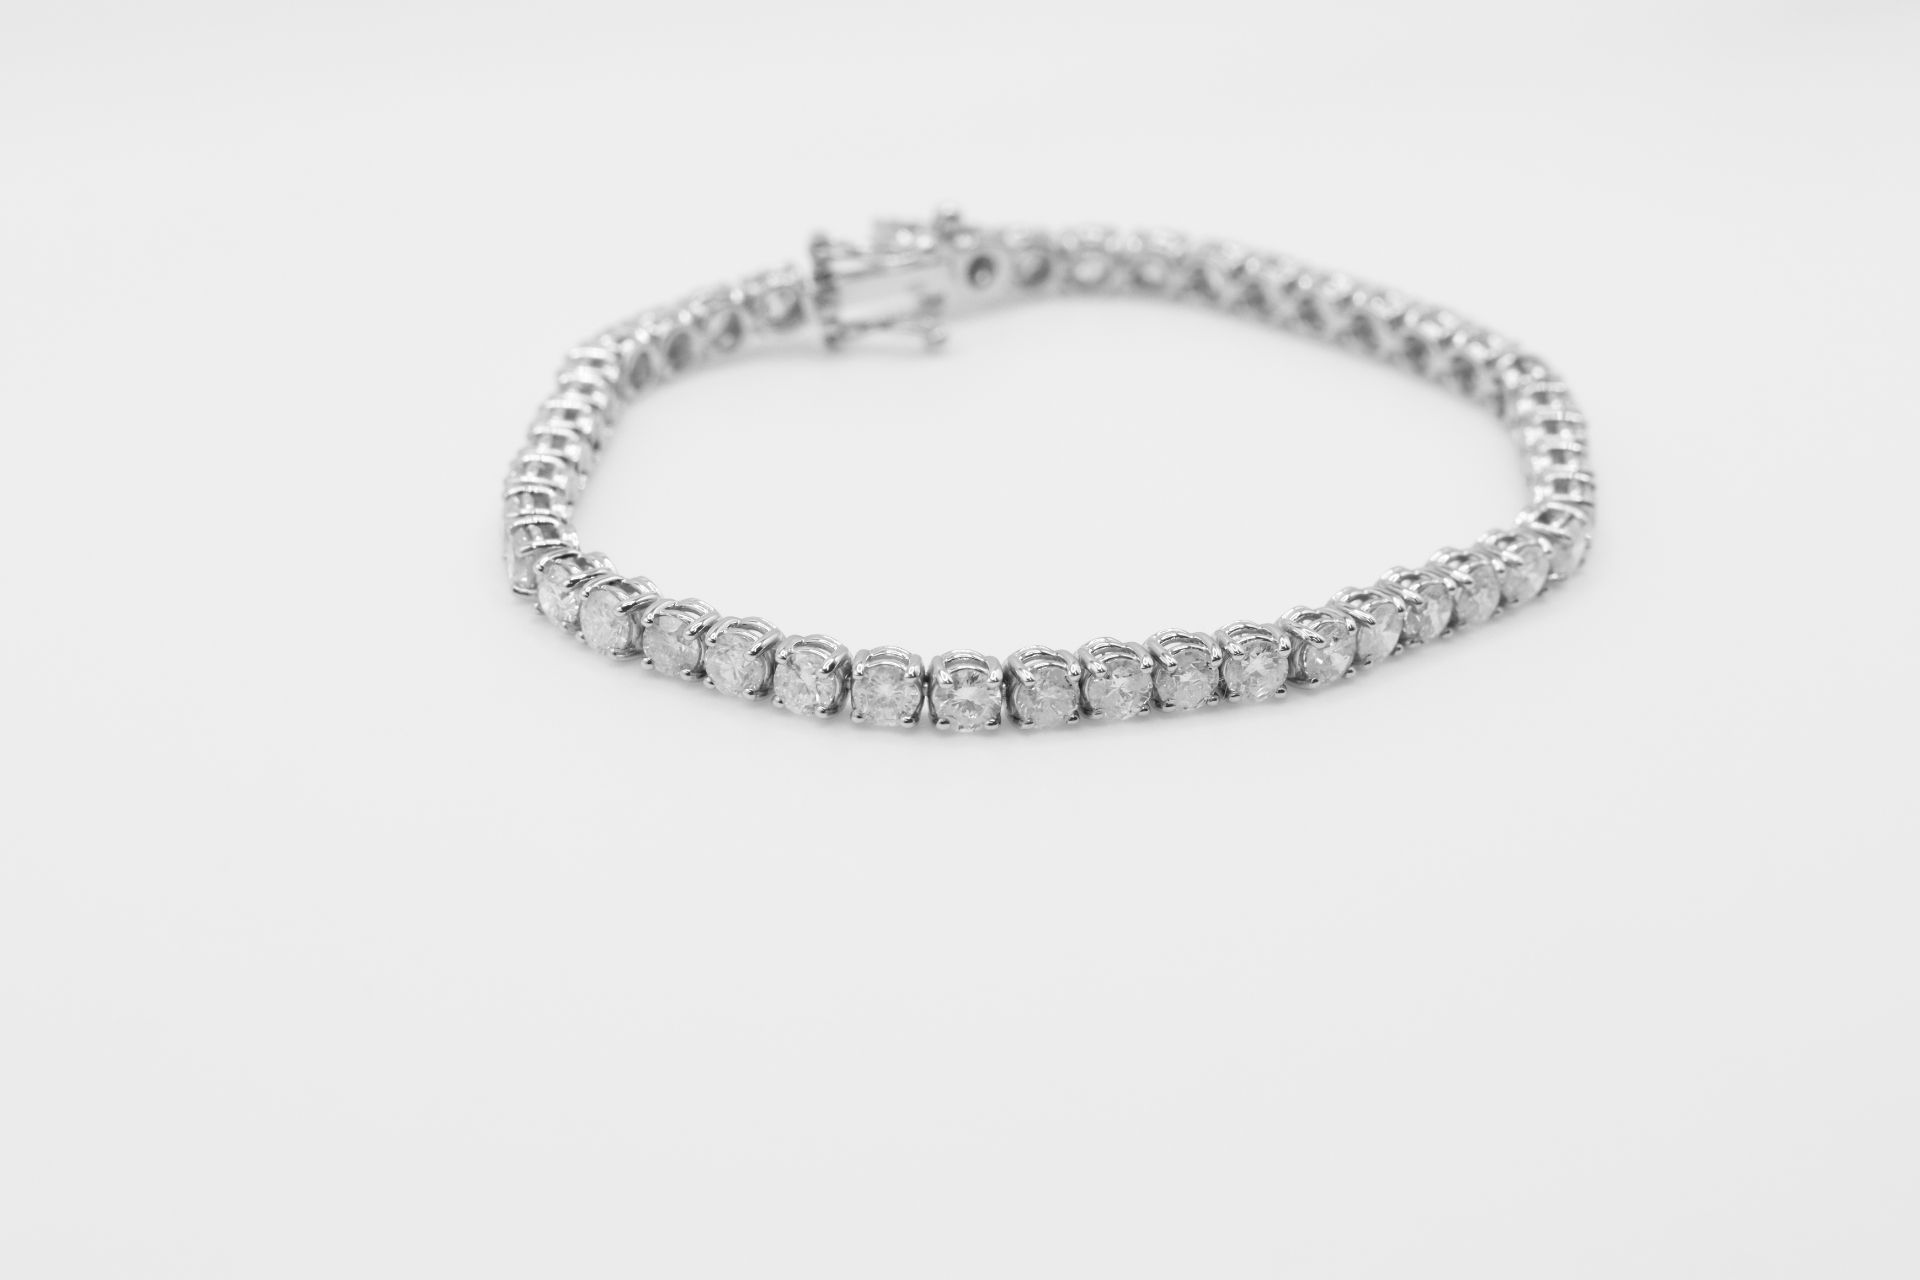 9.0 Carat 18ct White Gold Tennis Bracelet set with Round Brilliant Cut Natural Diamonds - Image 12 of 17